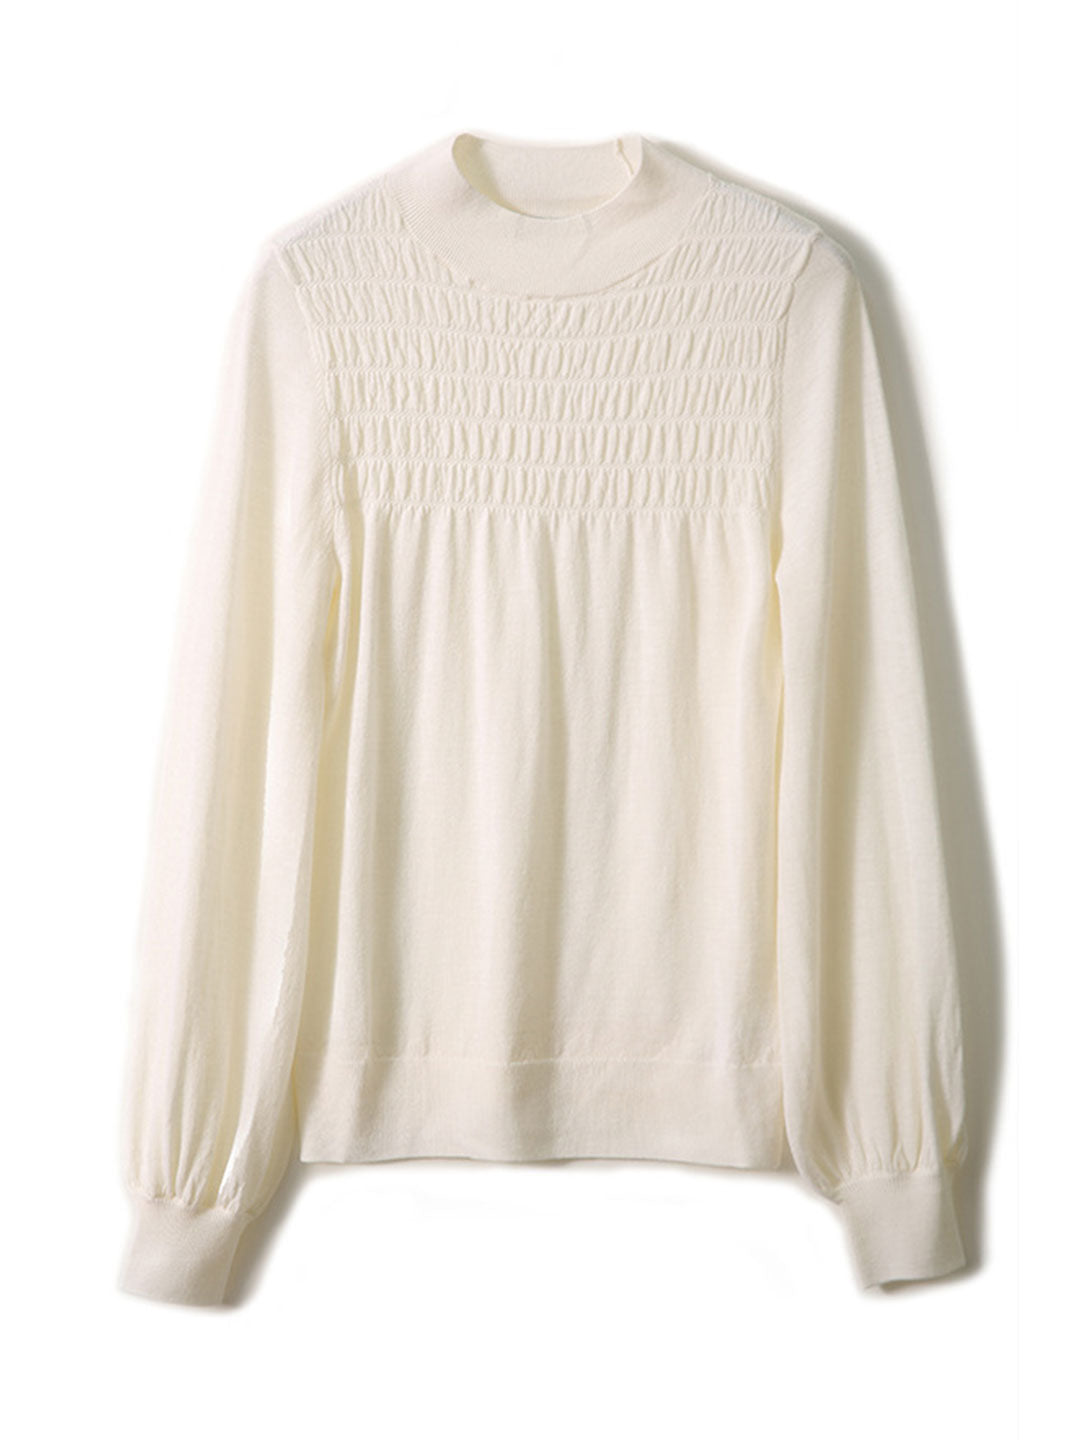 Hannah Retro Lantern Sleeve Knitted Sweater